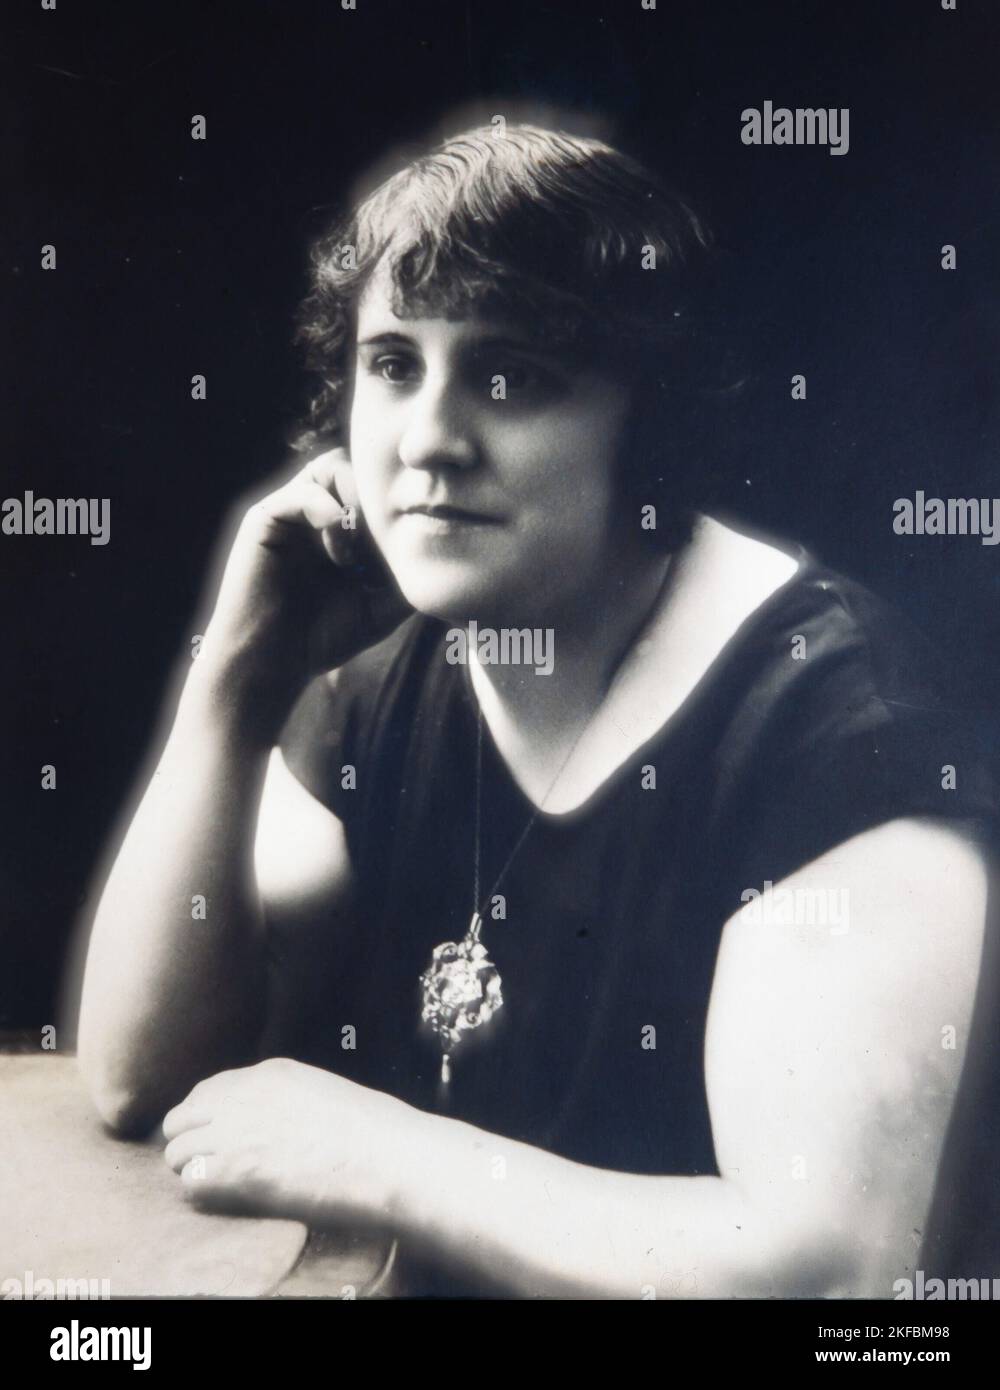 CLEMENTINA ARDERIU, (Barcelona, 6 de julio de 1889 - 17 de febrero de 1976) poetisa catalana. COLECCIÓN PRIVADA. Stock Photo